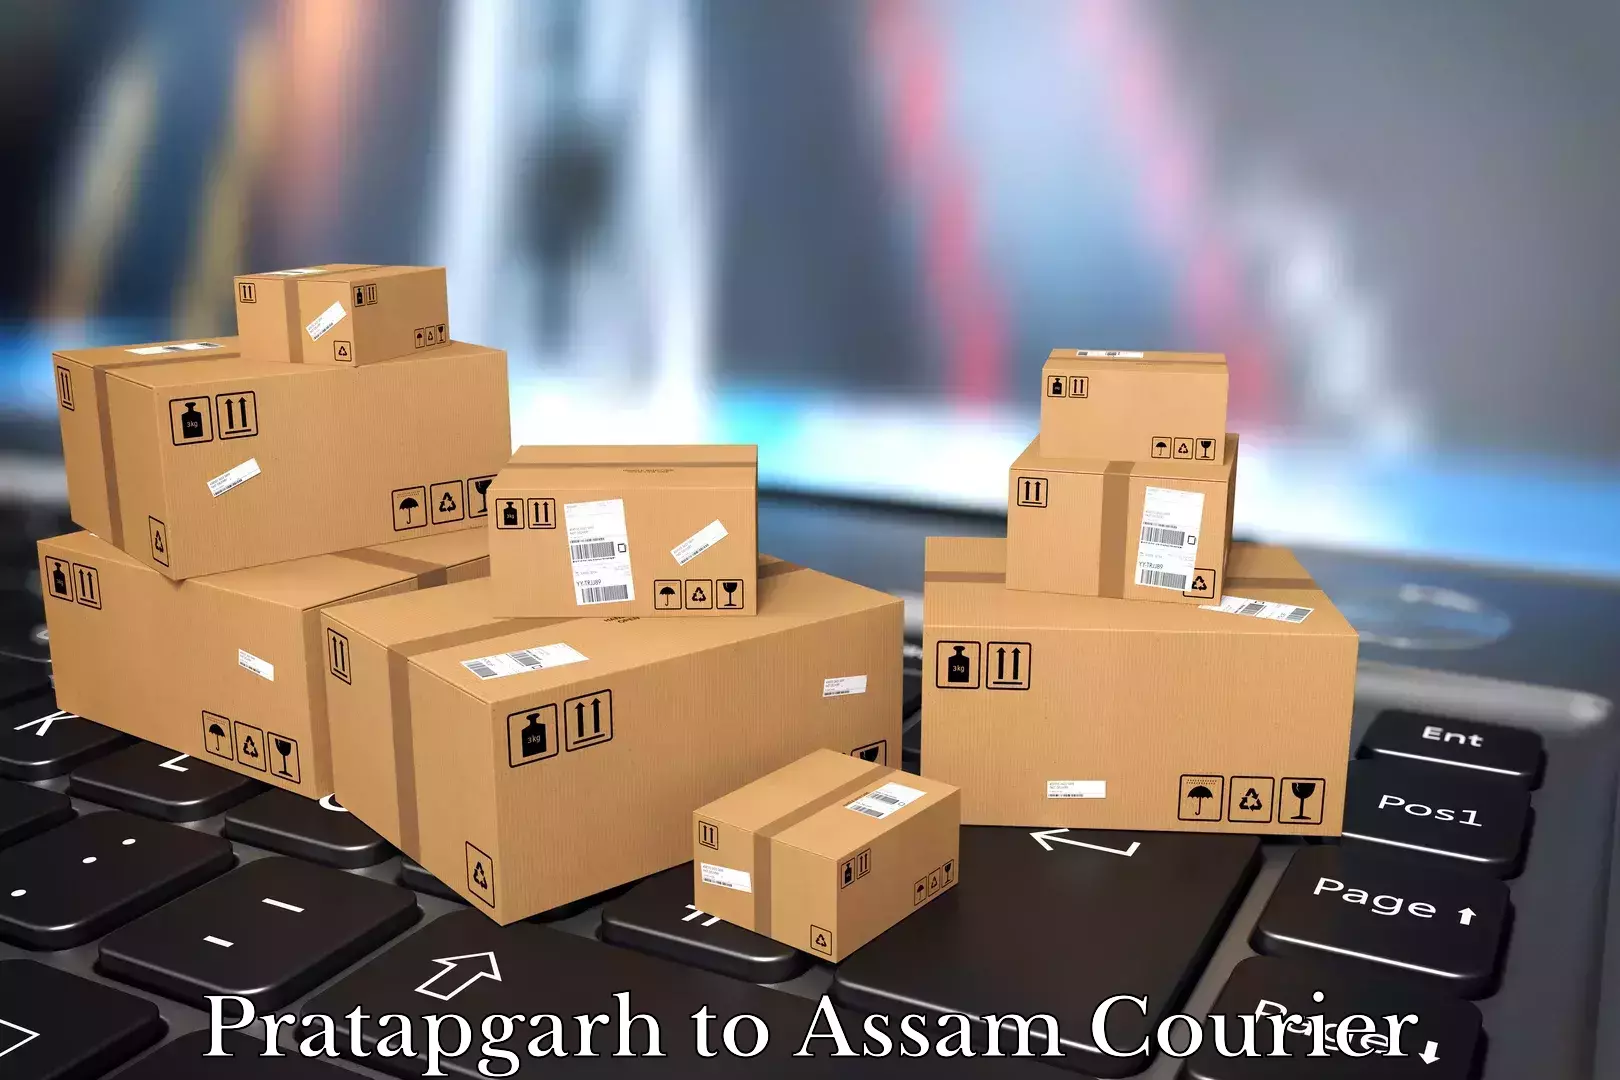 Professional moving company Pratapgarh to Lala Assam